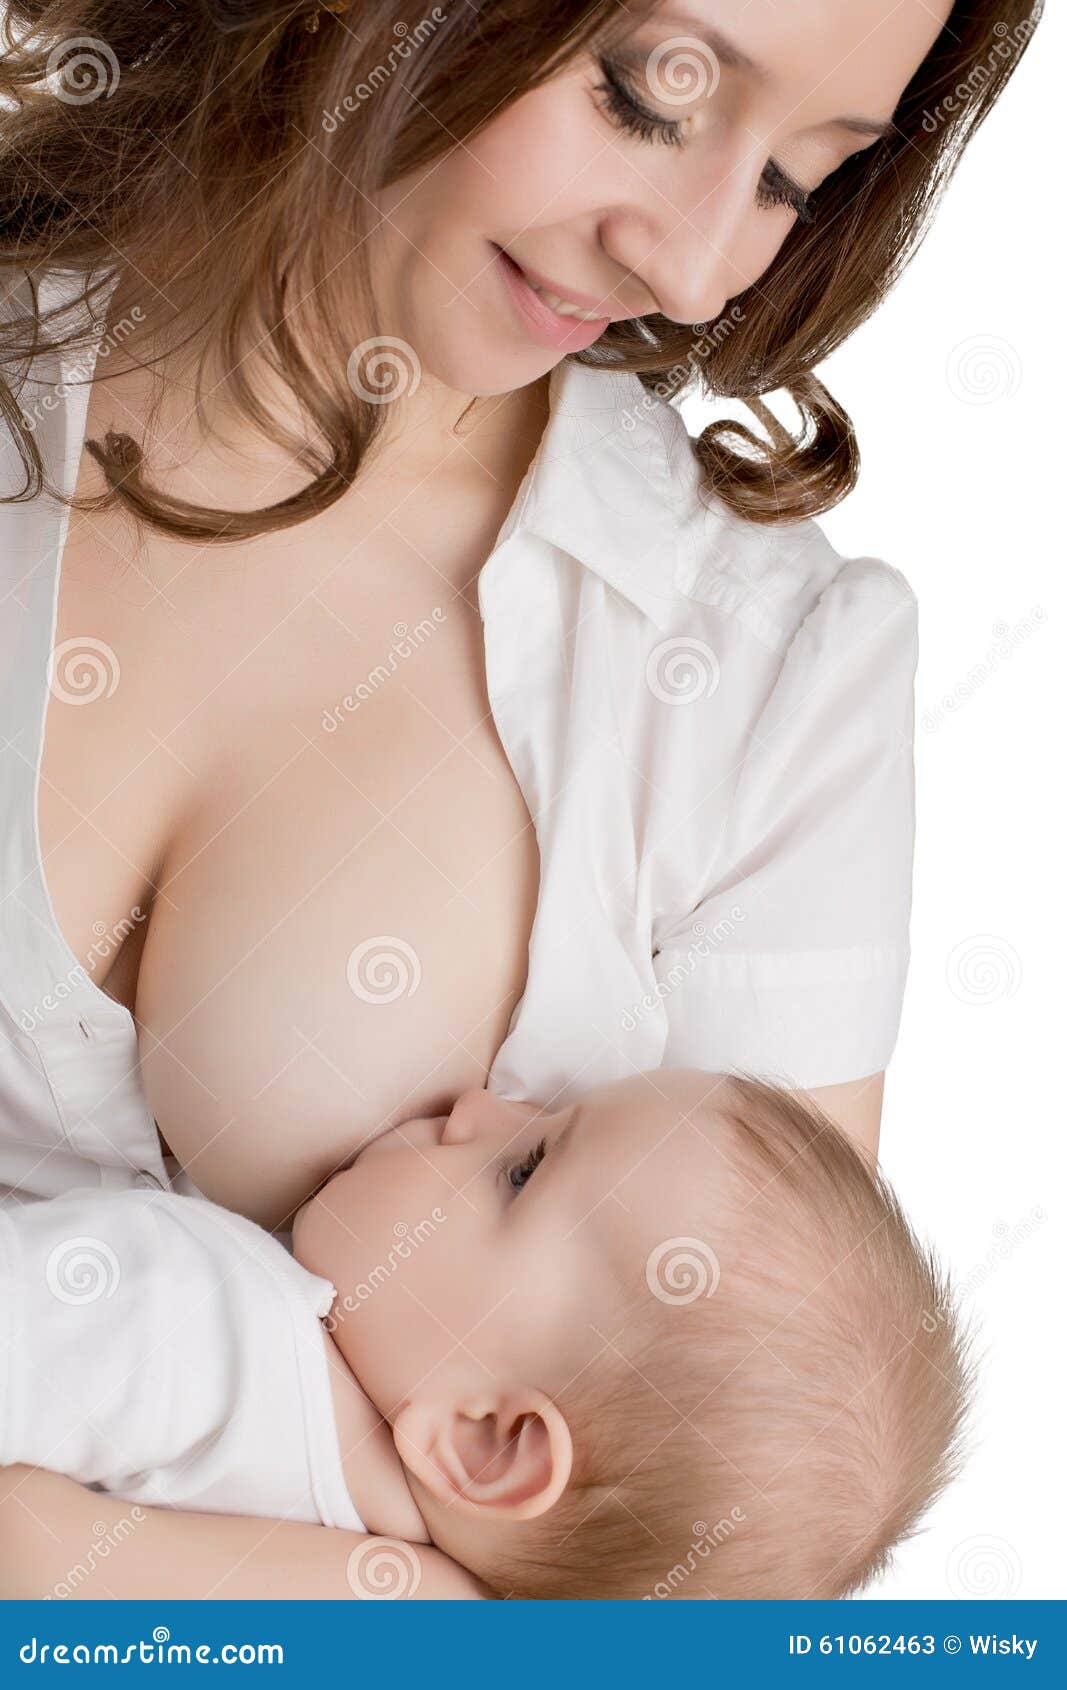 кормящая мама застужена грудь фото 11